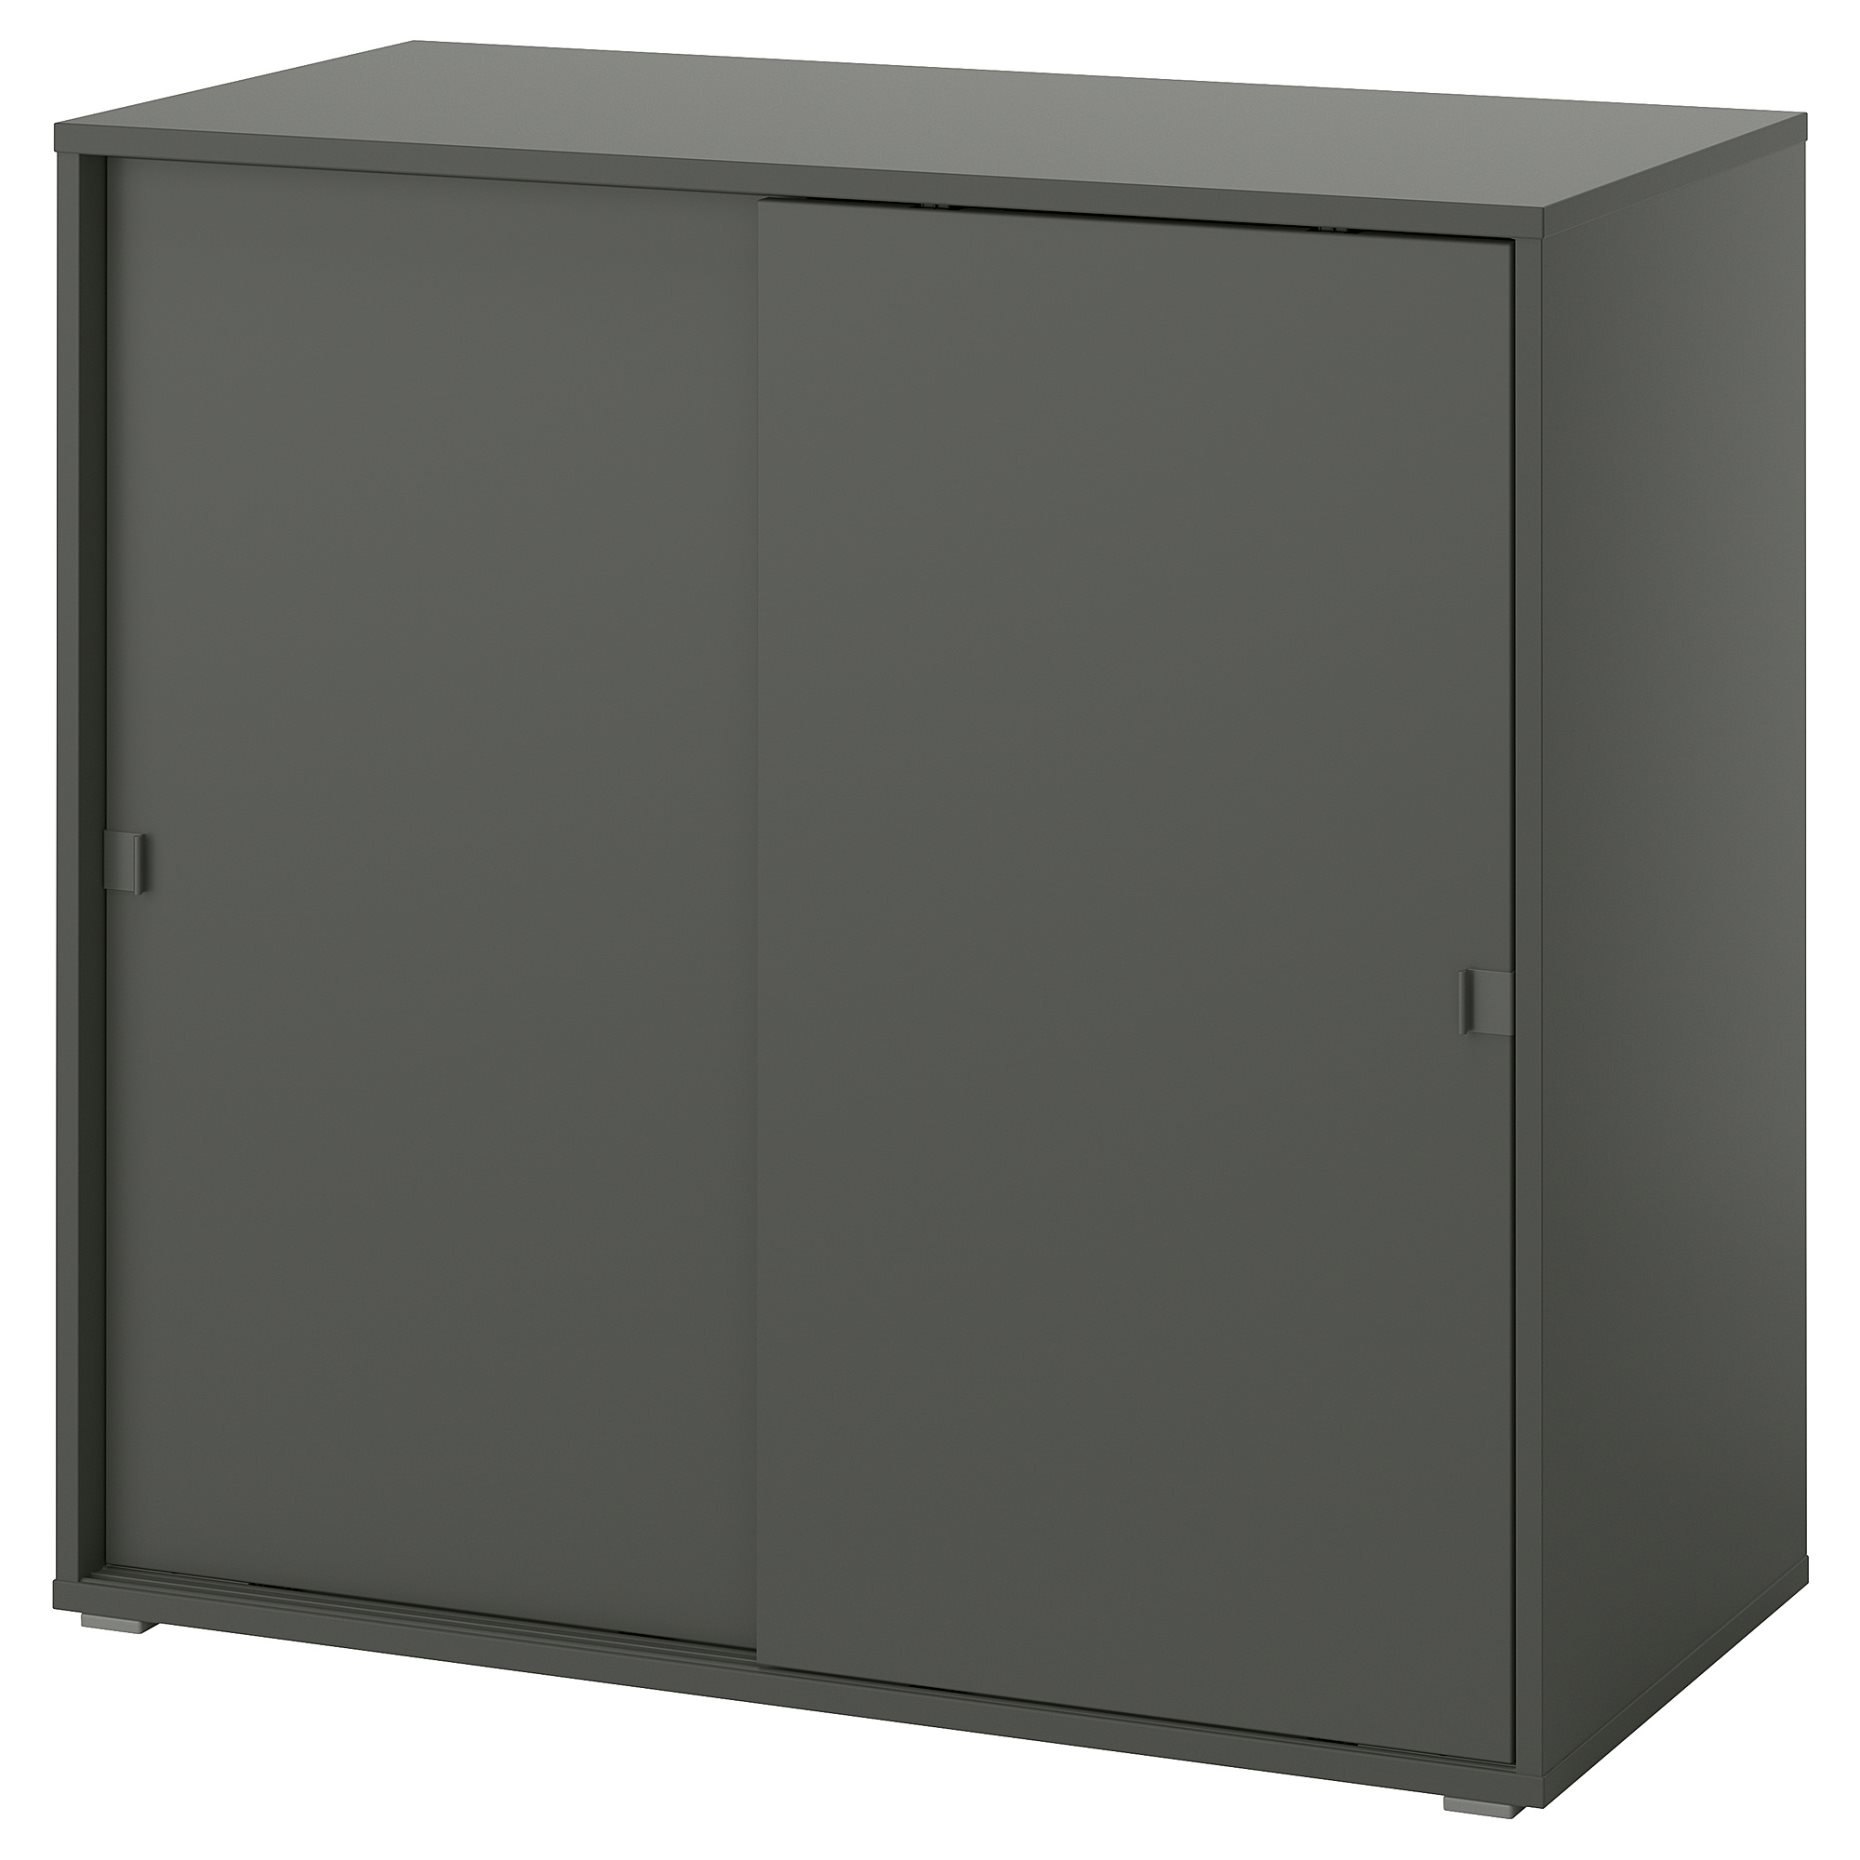 VIHALS, cabinet with sliding doors, 95x47x90 cm, 905.428.90